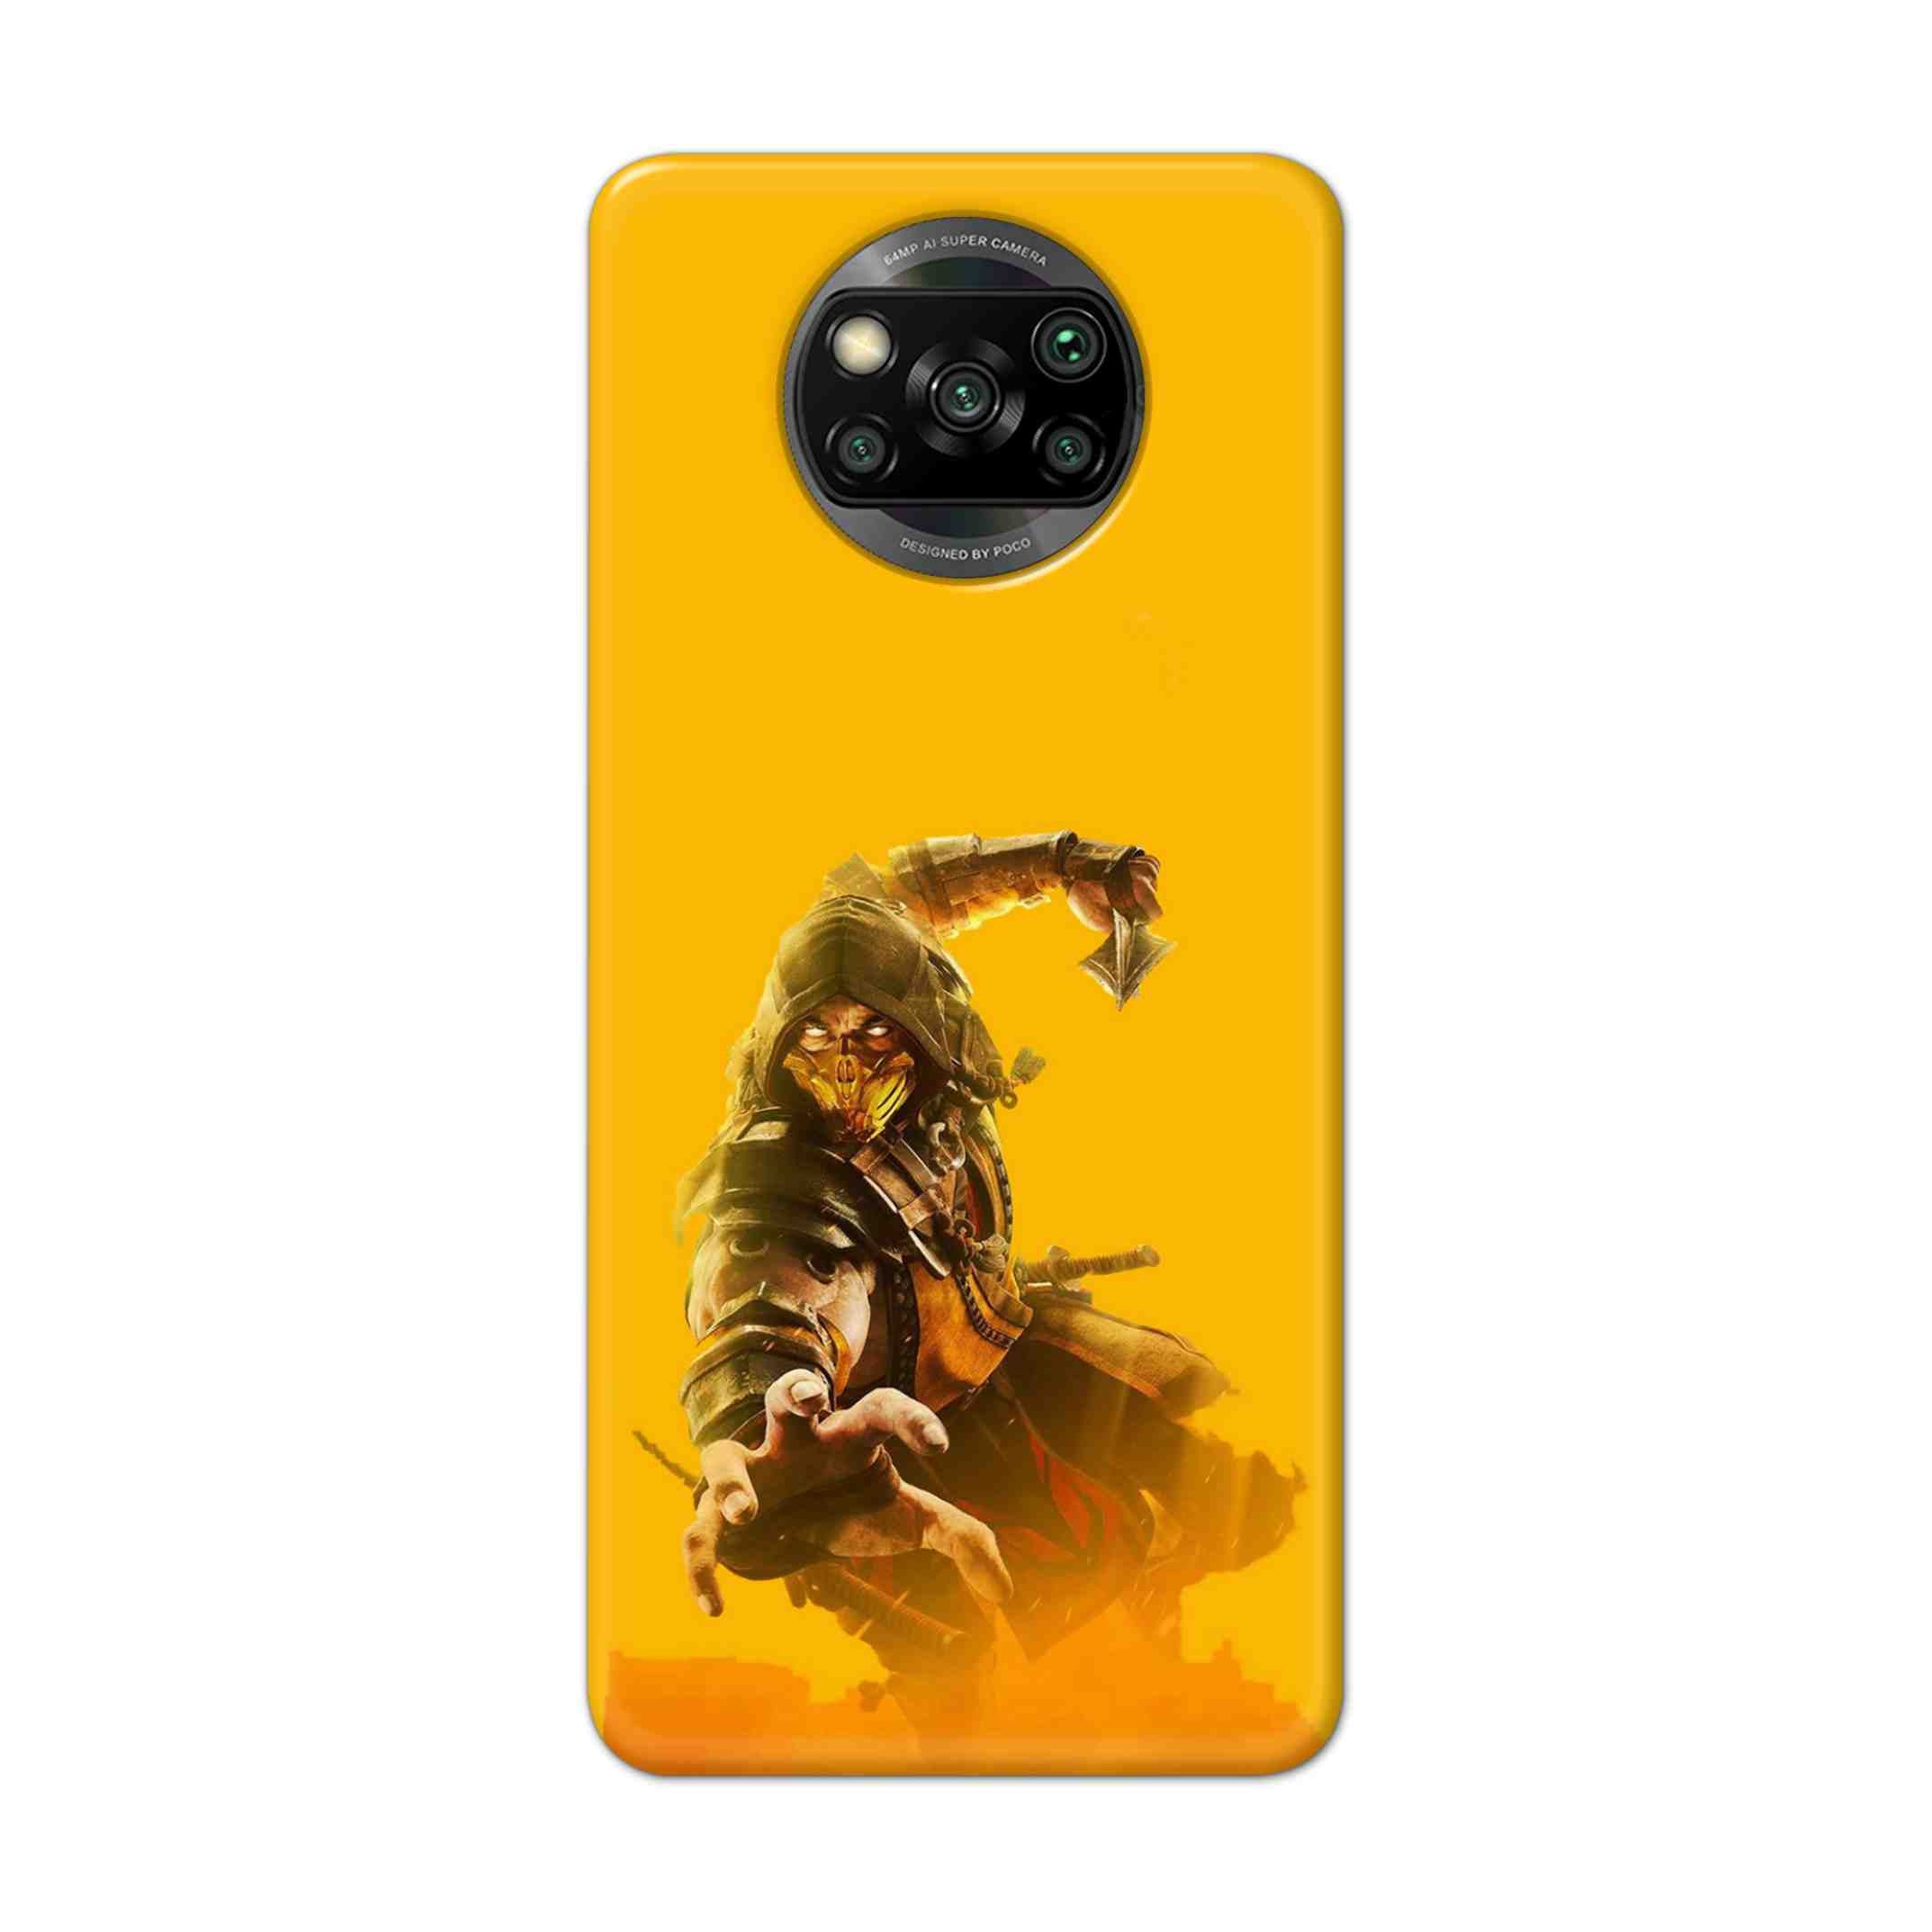 Buy Mortal Kombat Hard Back Mobile Phone Case Cover For Pcoc X3 NFC Online